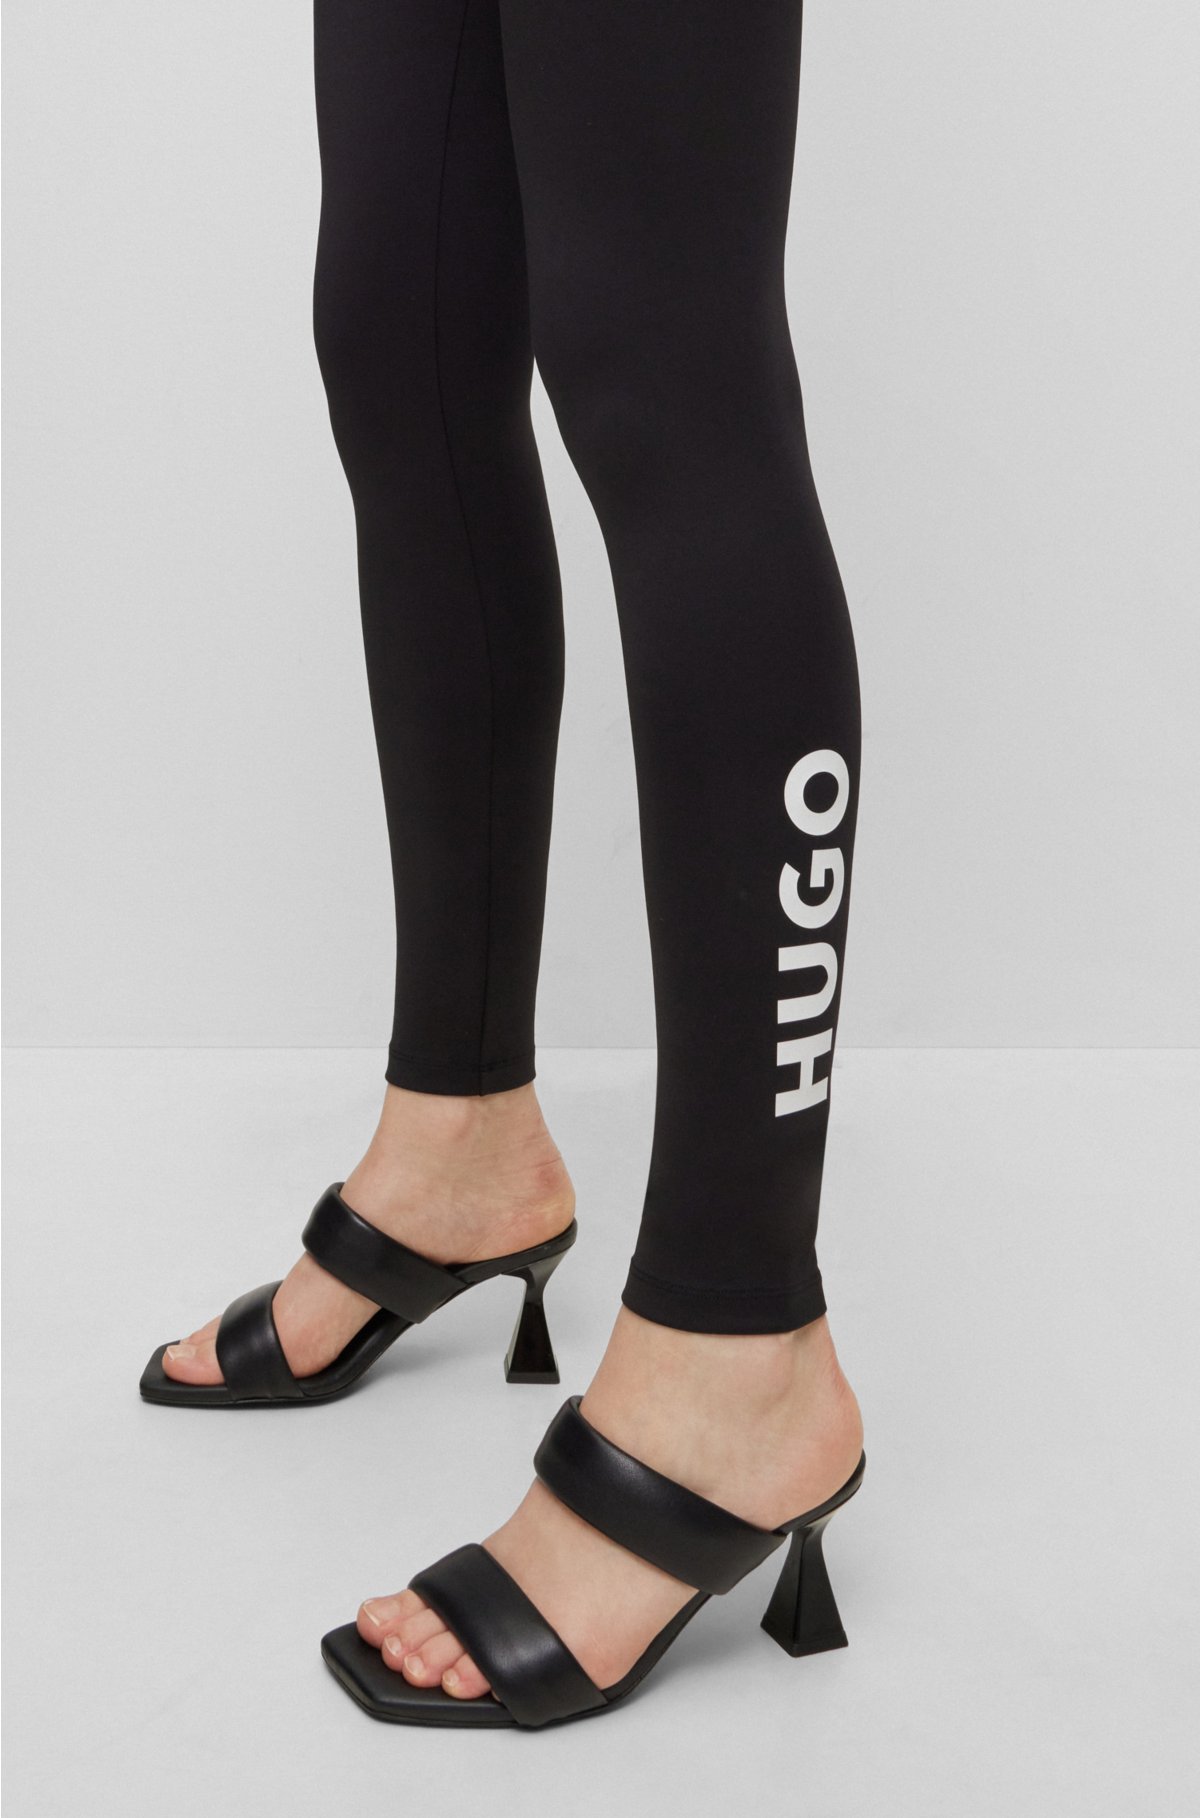 HUGO - Skinny-fit super-stretch leggings with logo details